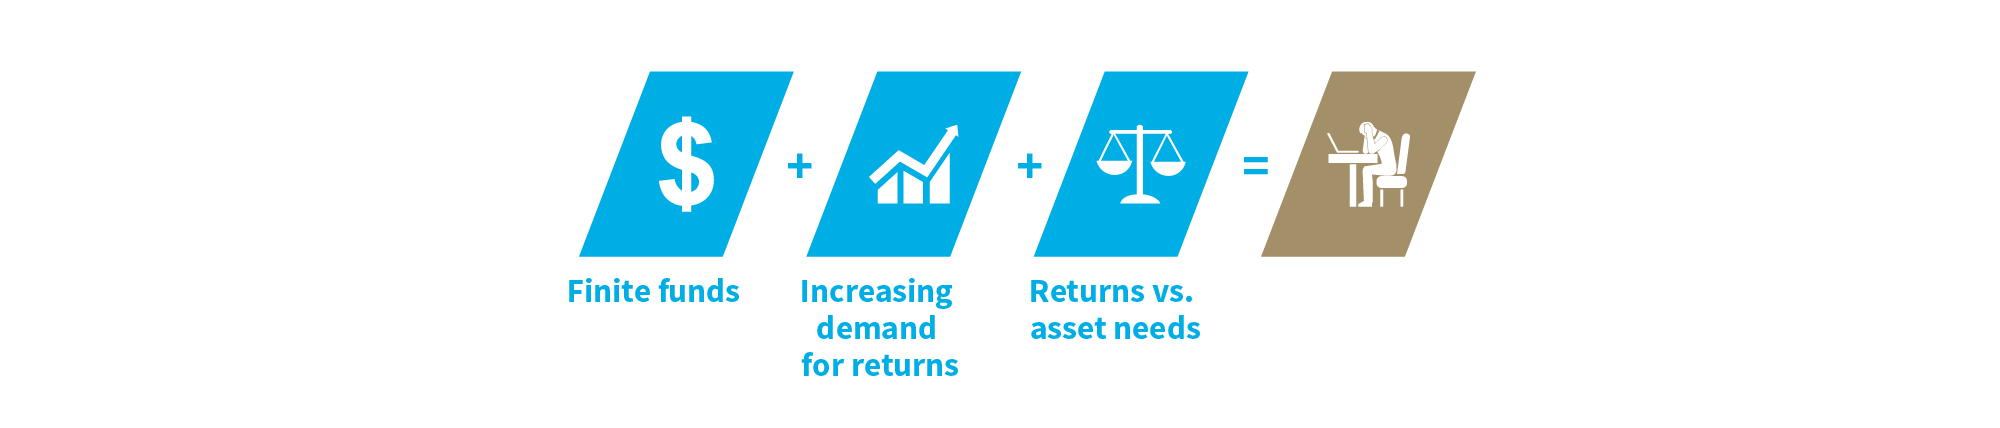 Finite funds plus demands for returns plus assets needs equals frustration